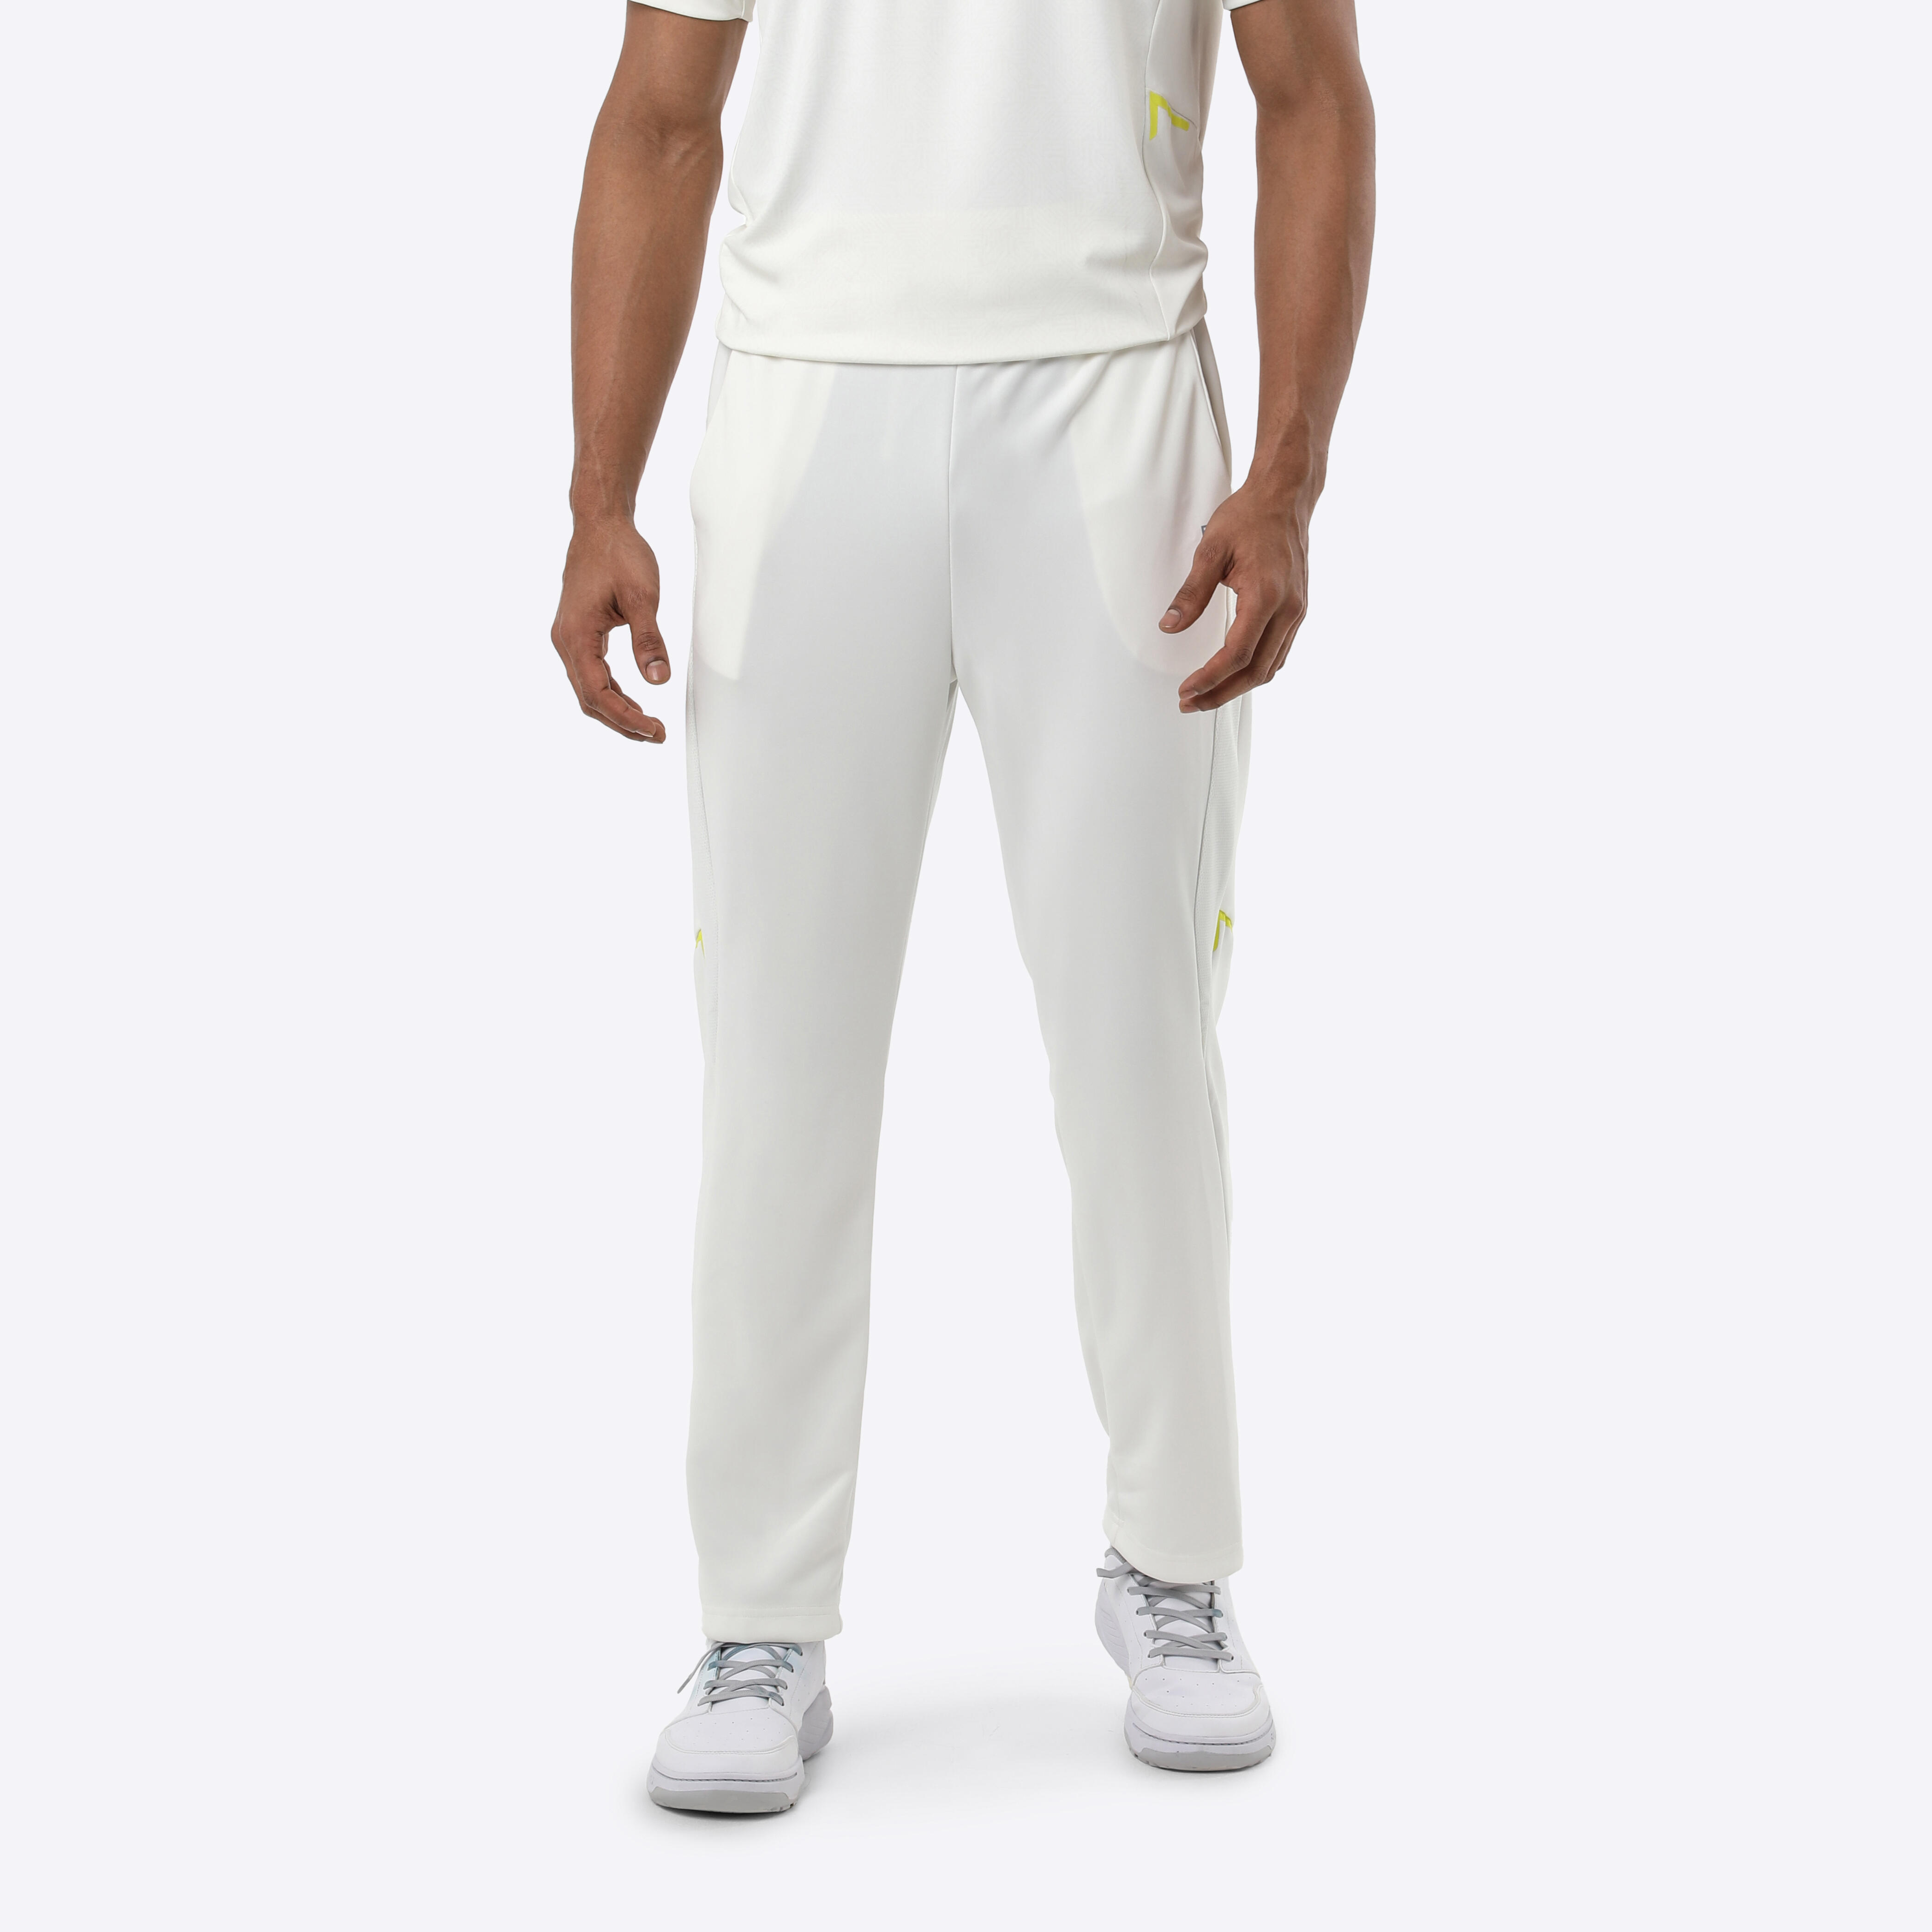 Men Cricket White Pant 28 Inch waist Size